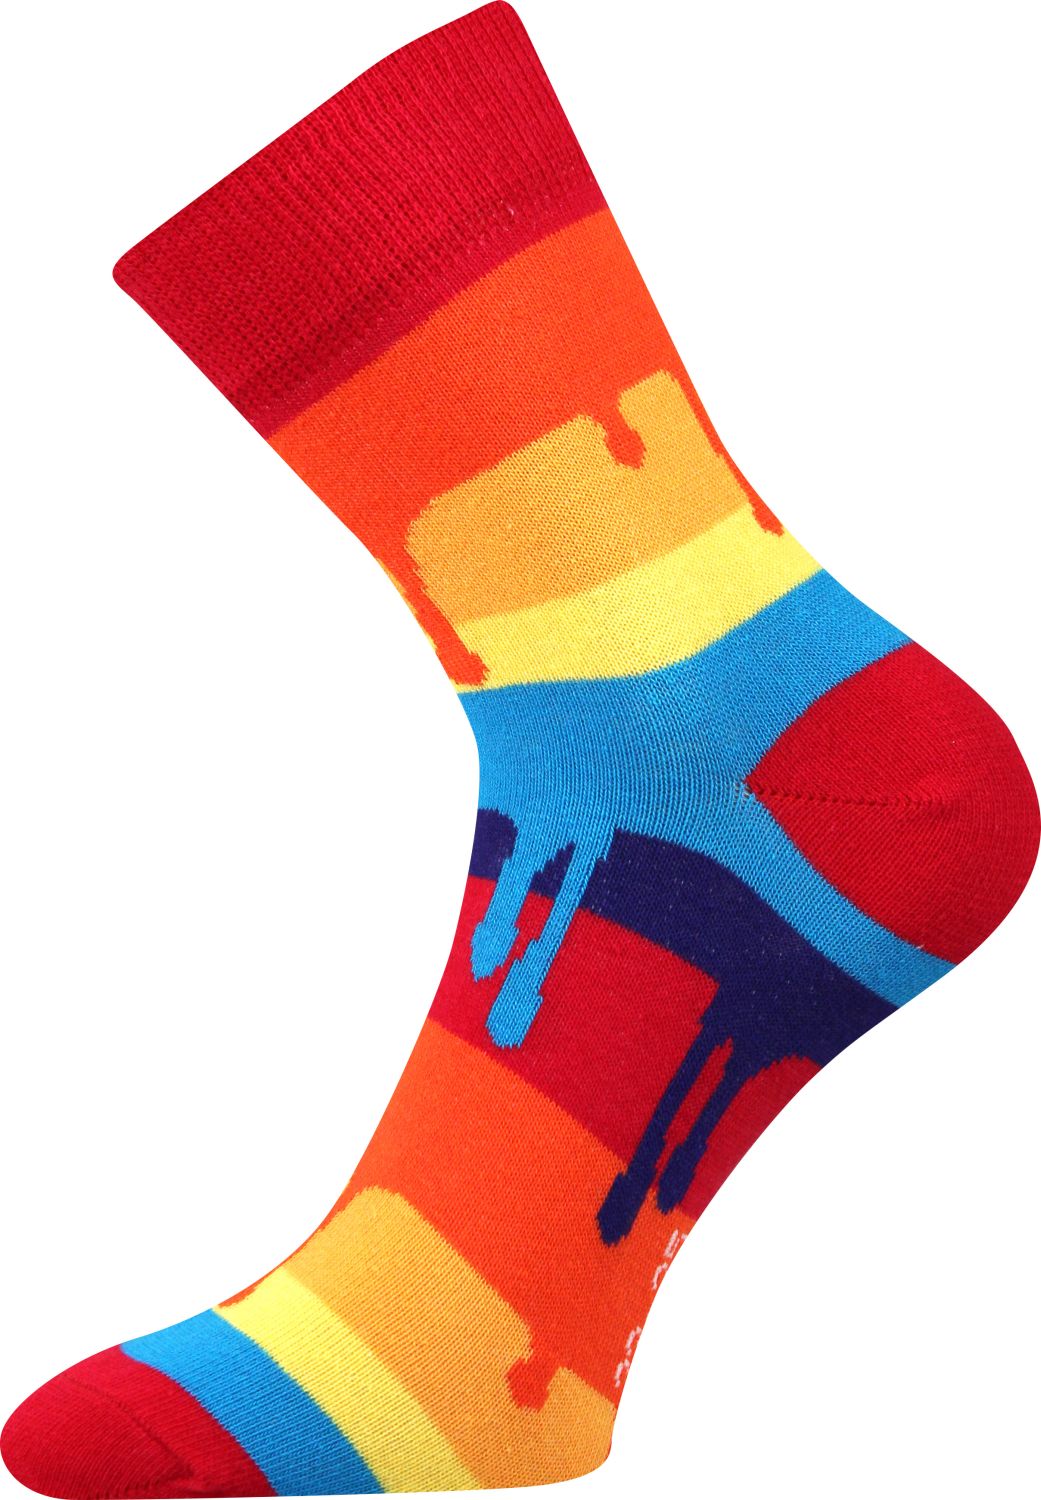 Stilvolle Socken